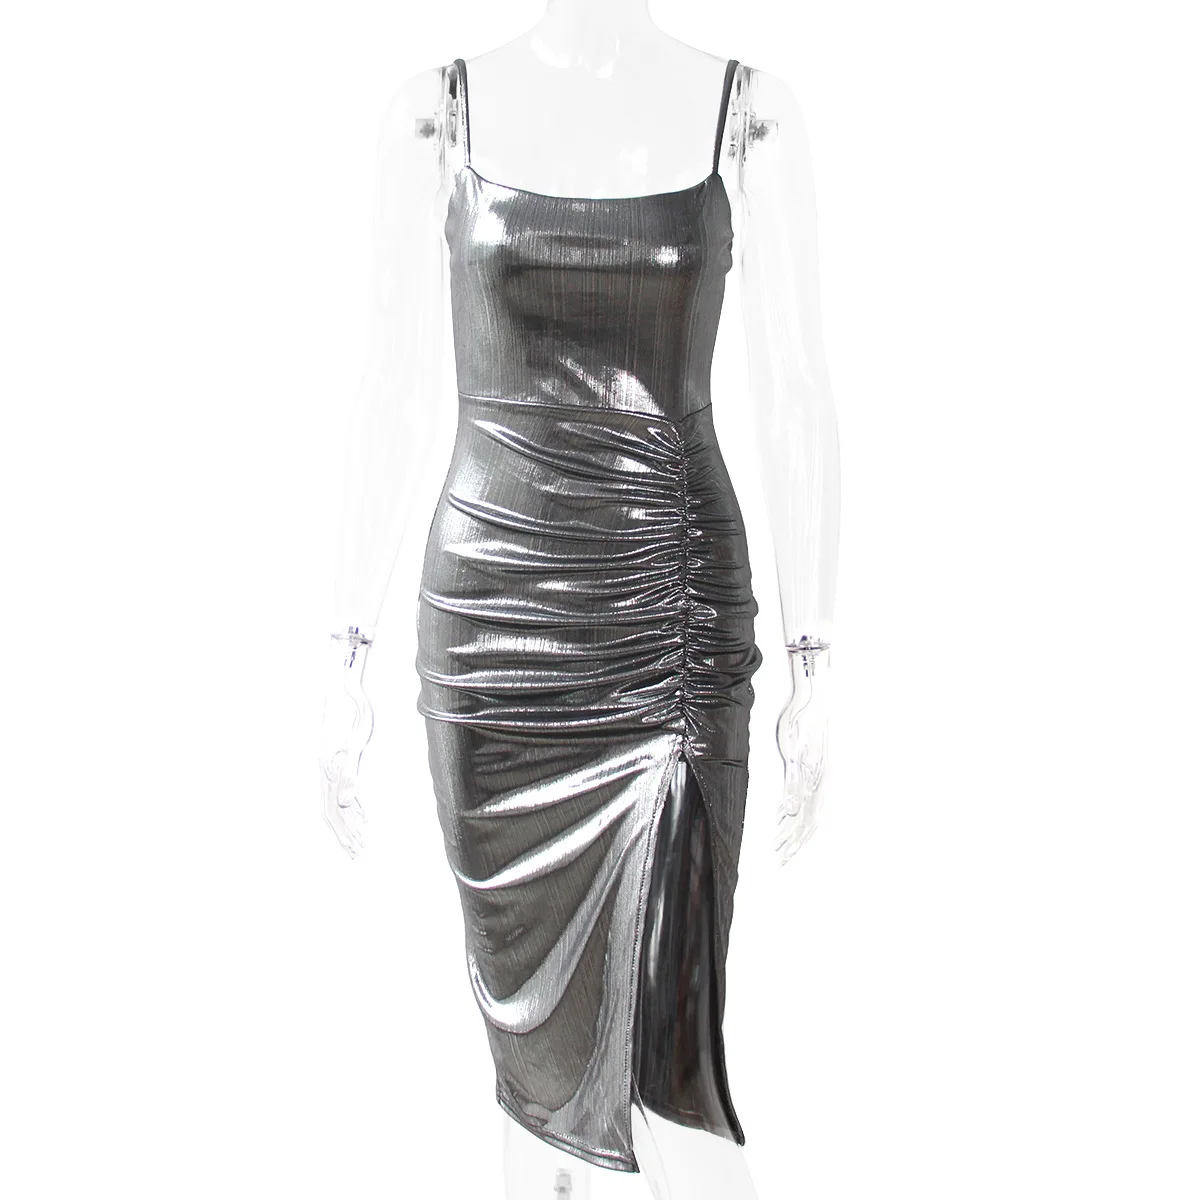 KOLLSEEY Brand 2021 Trendy Sexy Crisscross Back Mini Dresses For Women Sleeveless Bodycon Sparkle Dress enlarge